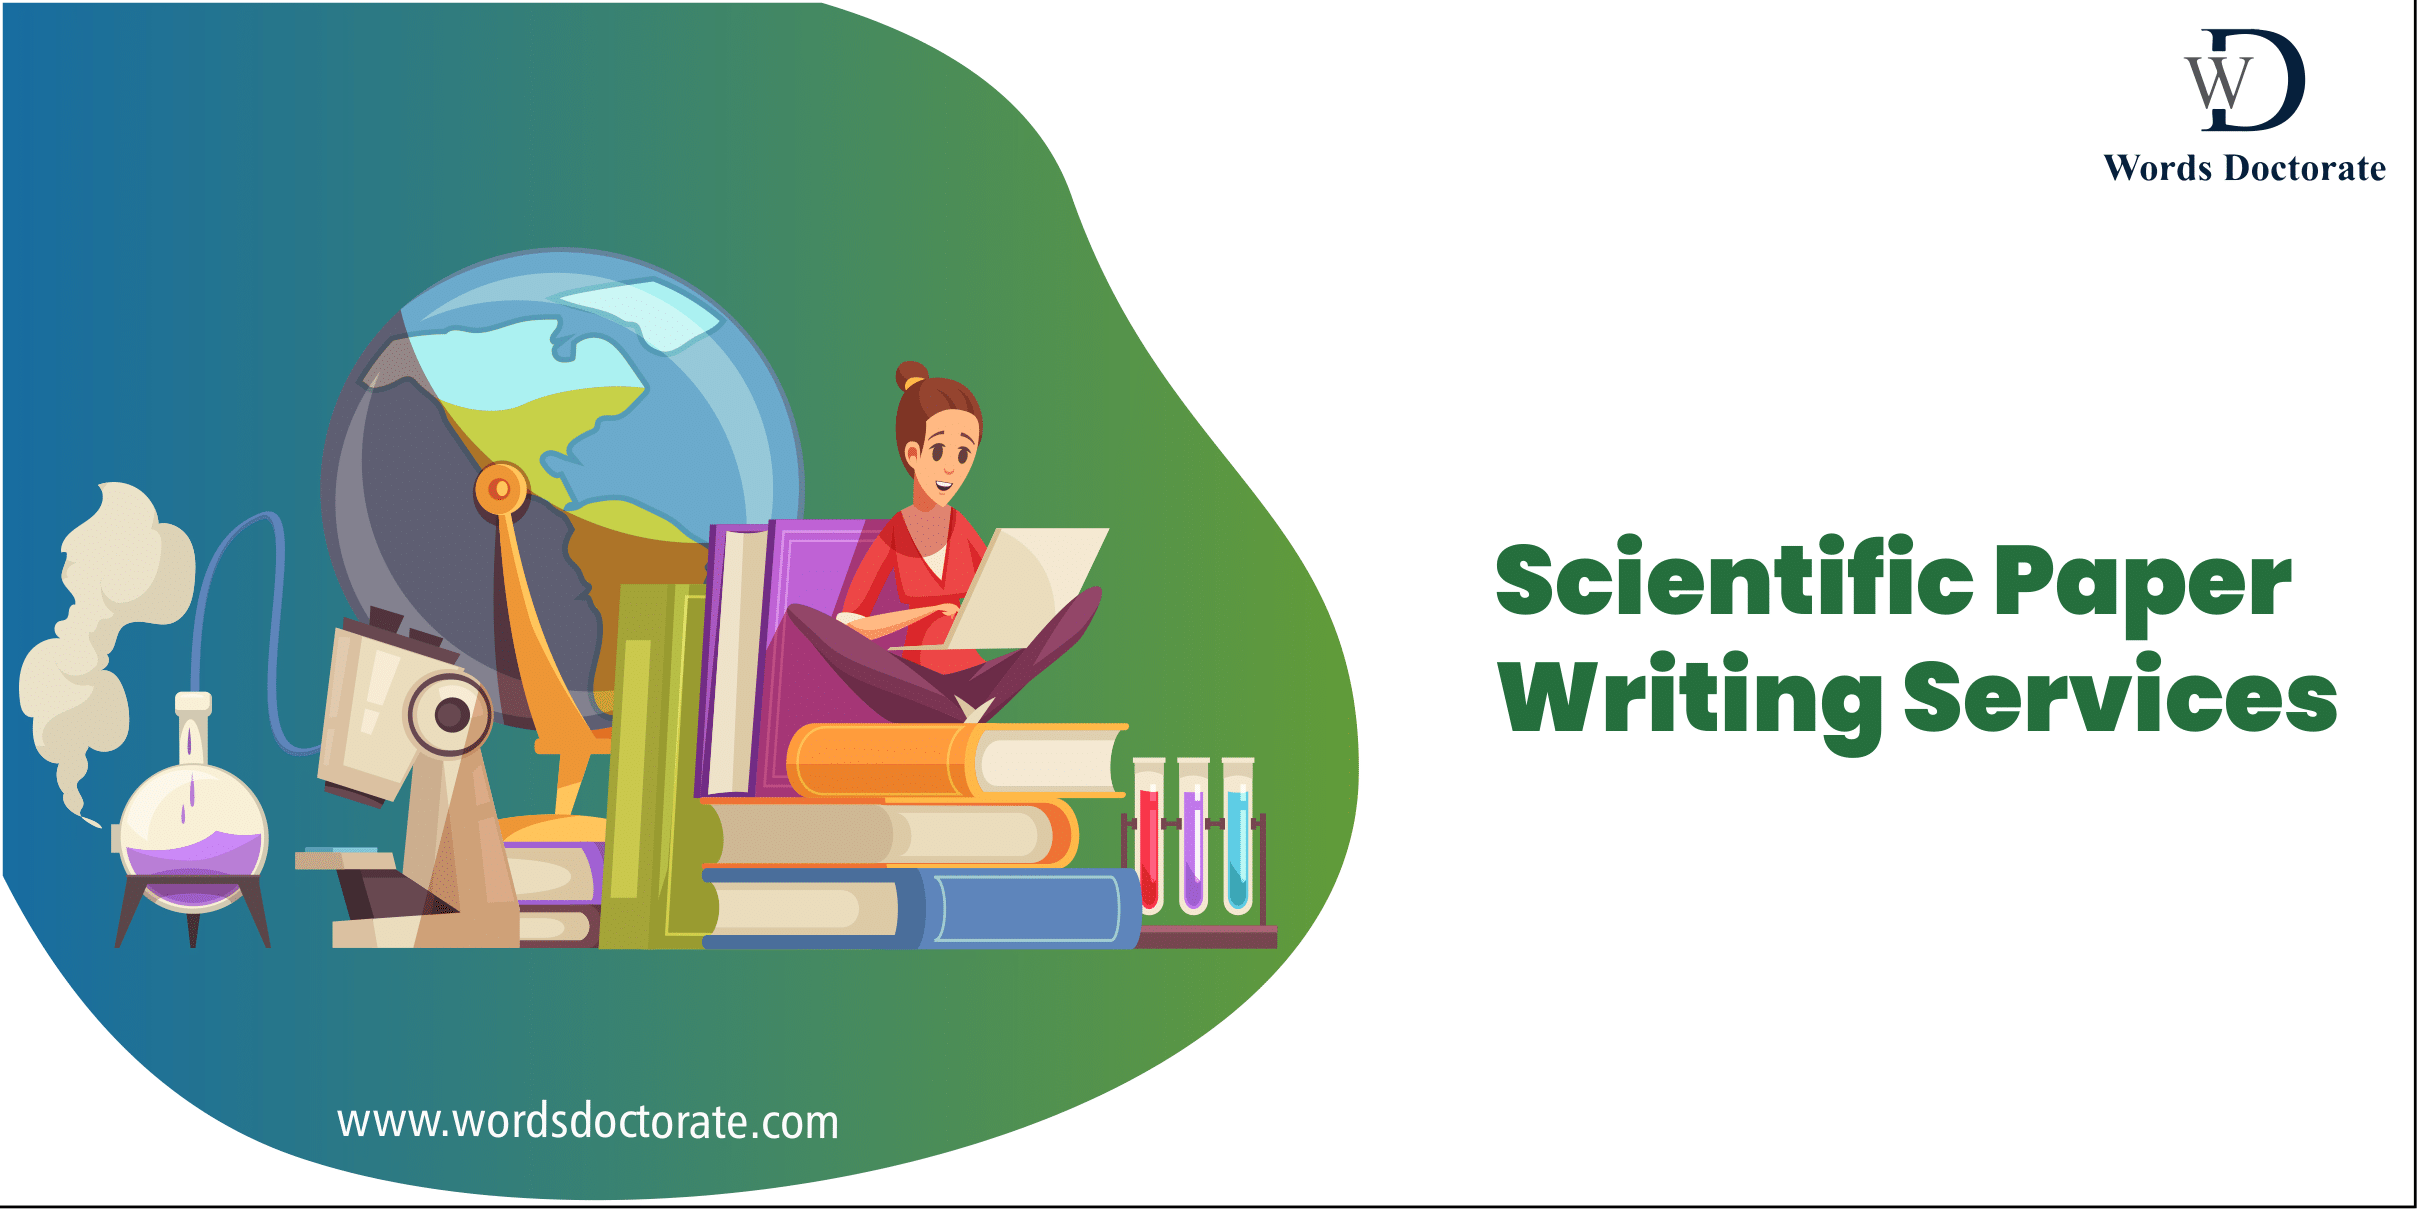 Scientific Paper Writing Services